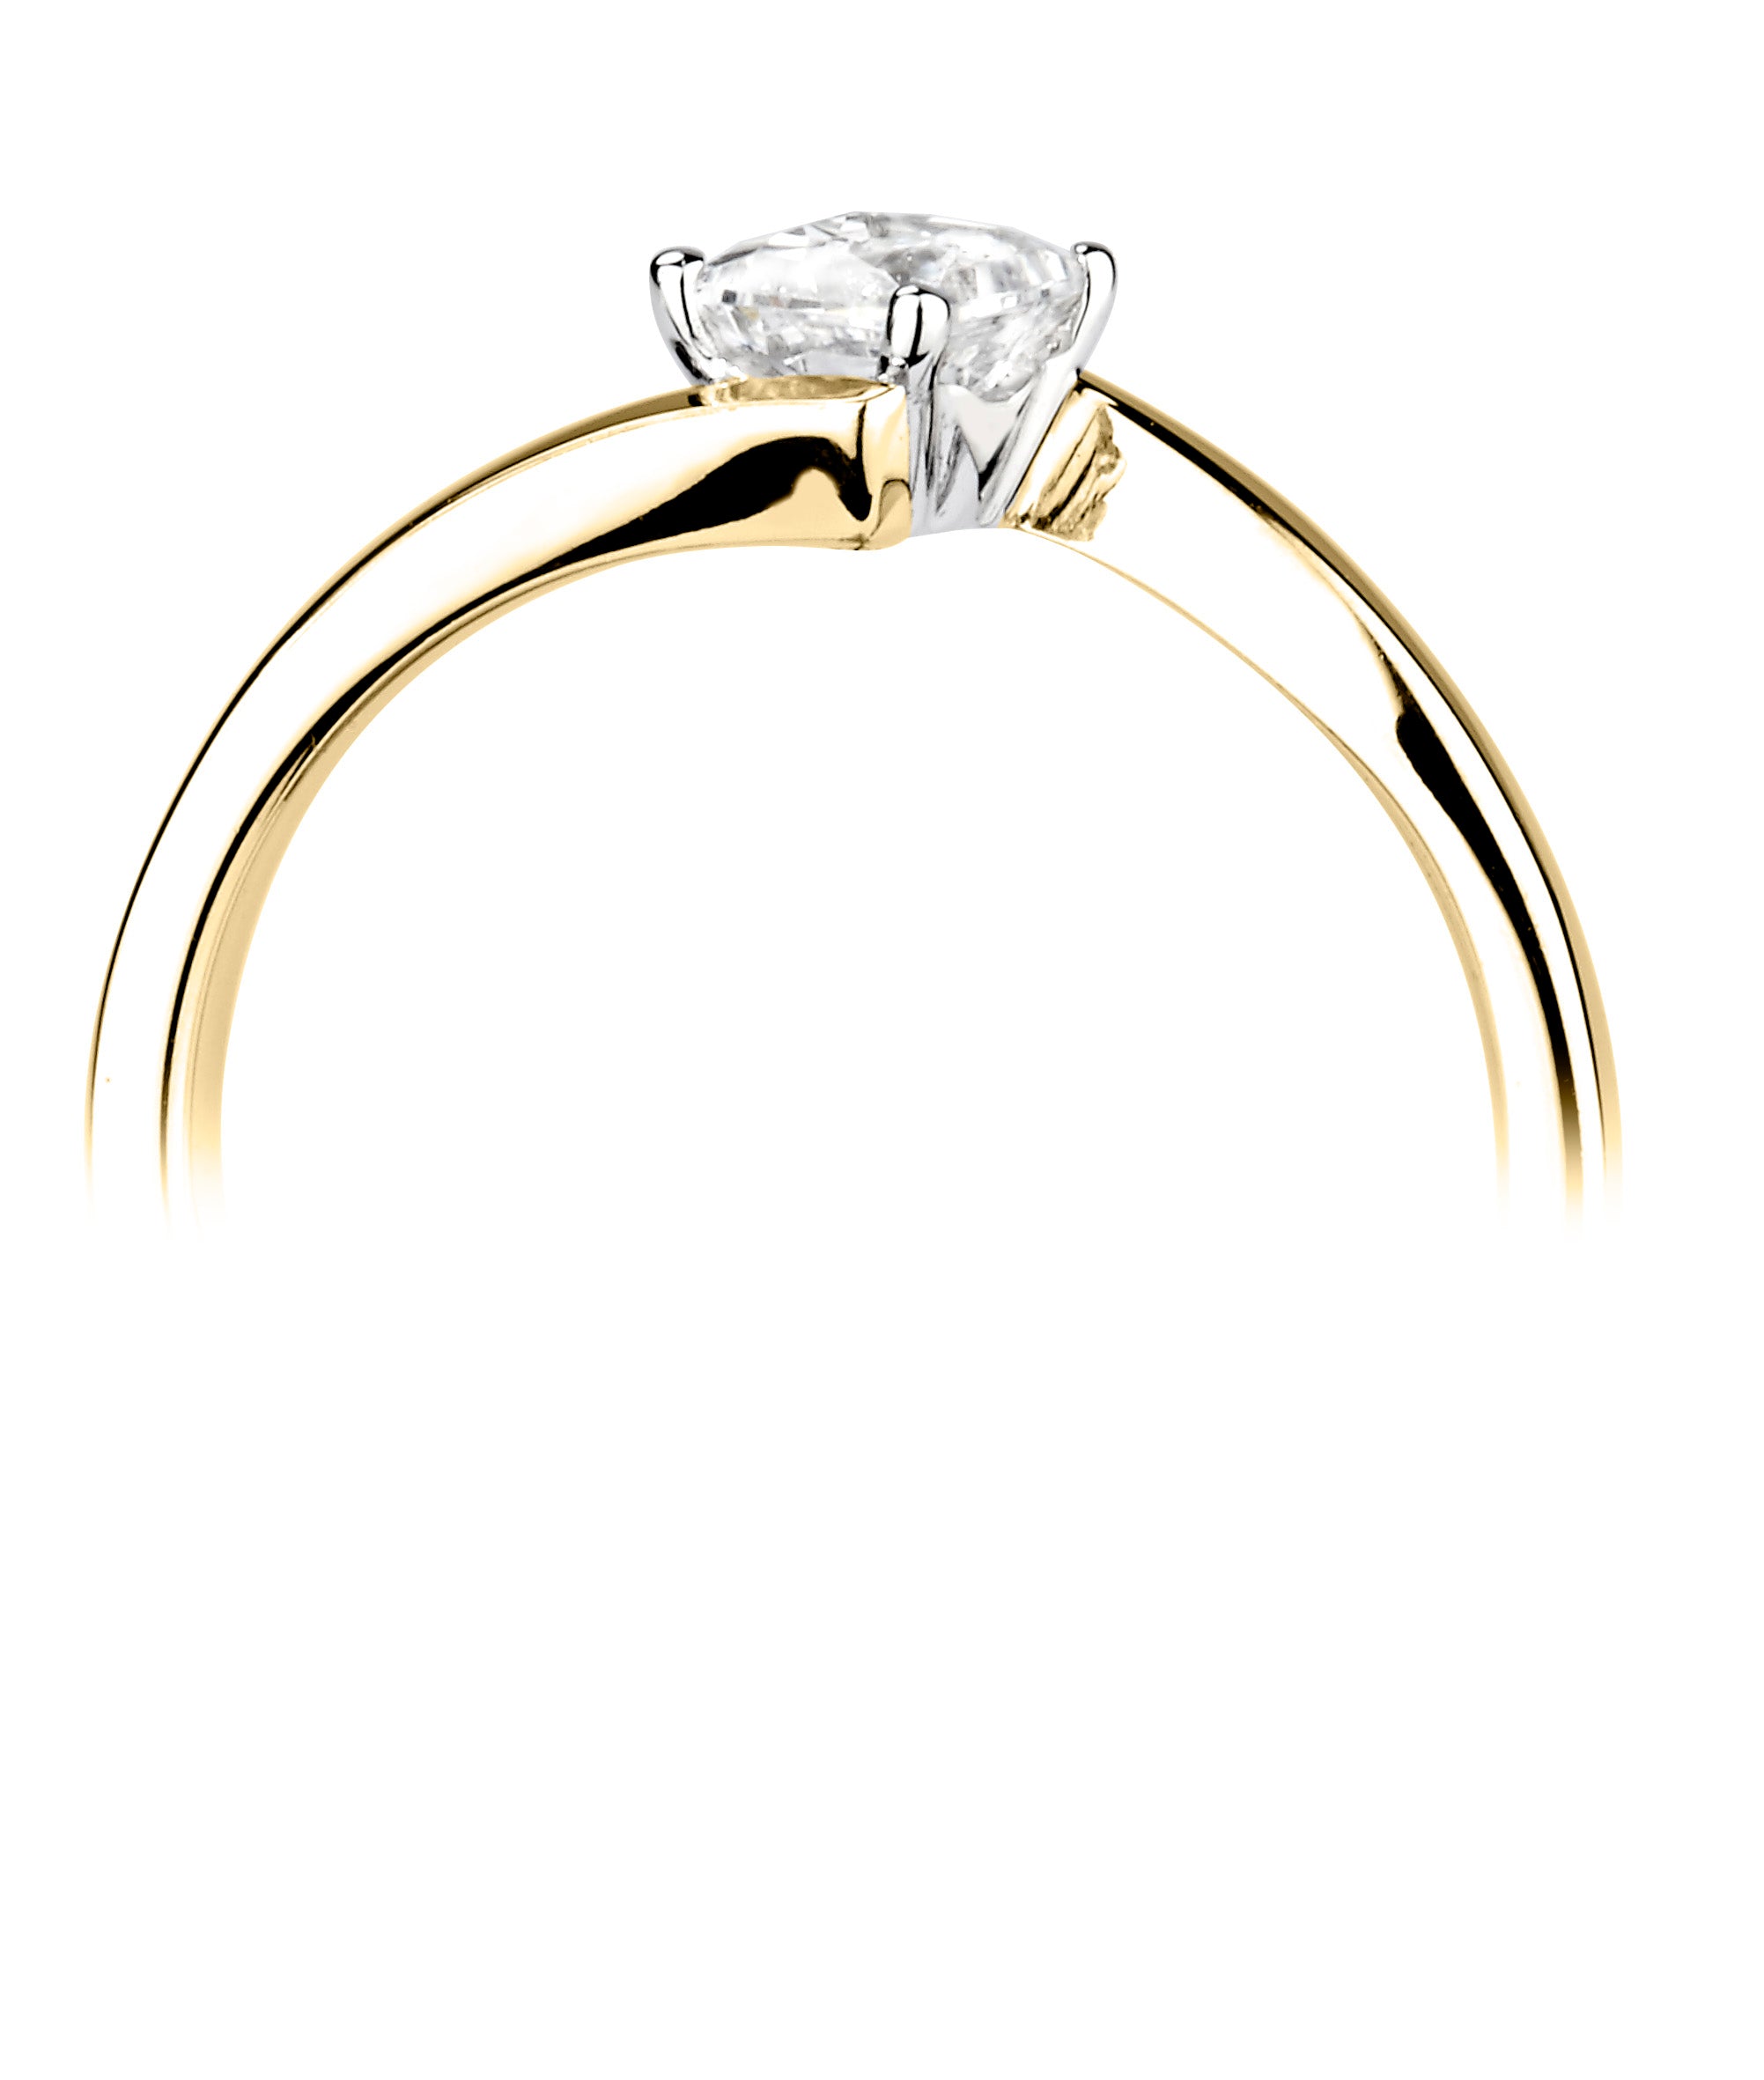 18CT Yellow Gold Princess Cut Diamond Cross Over Solitaire Ring - Robert Anthony Jewellers, Edinburgh